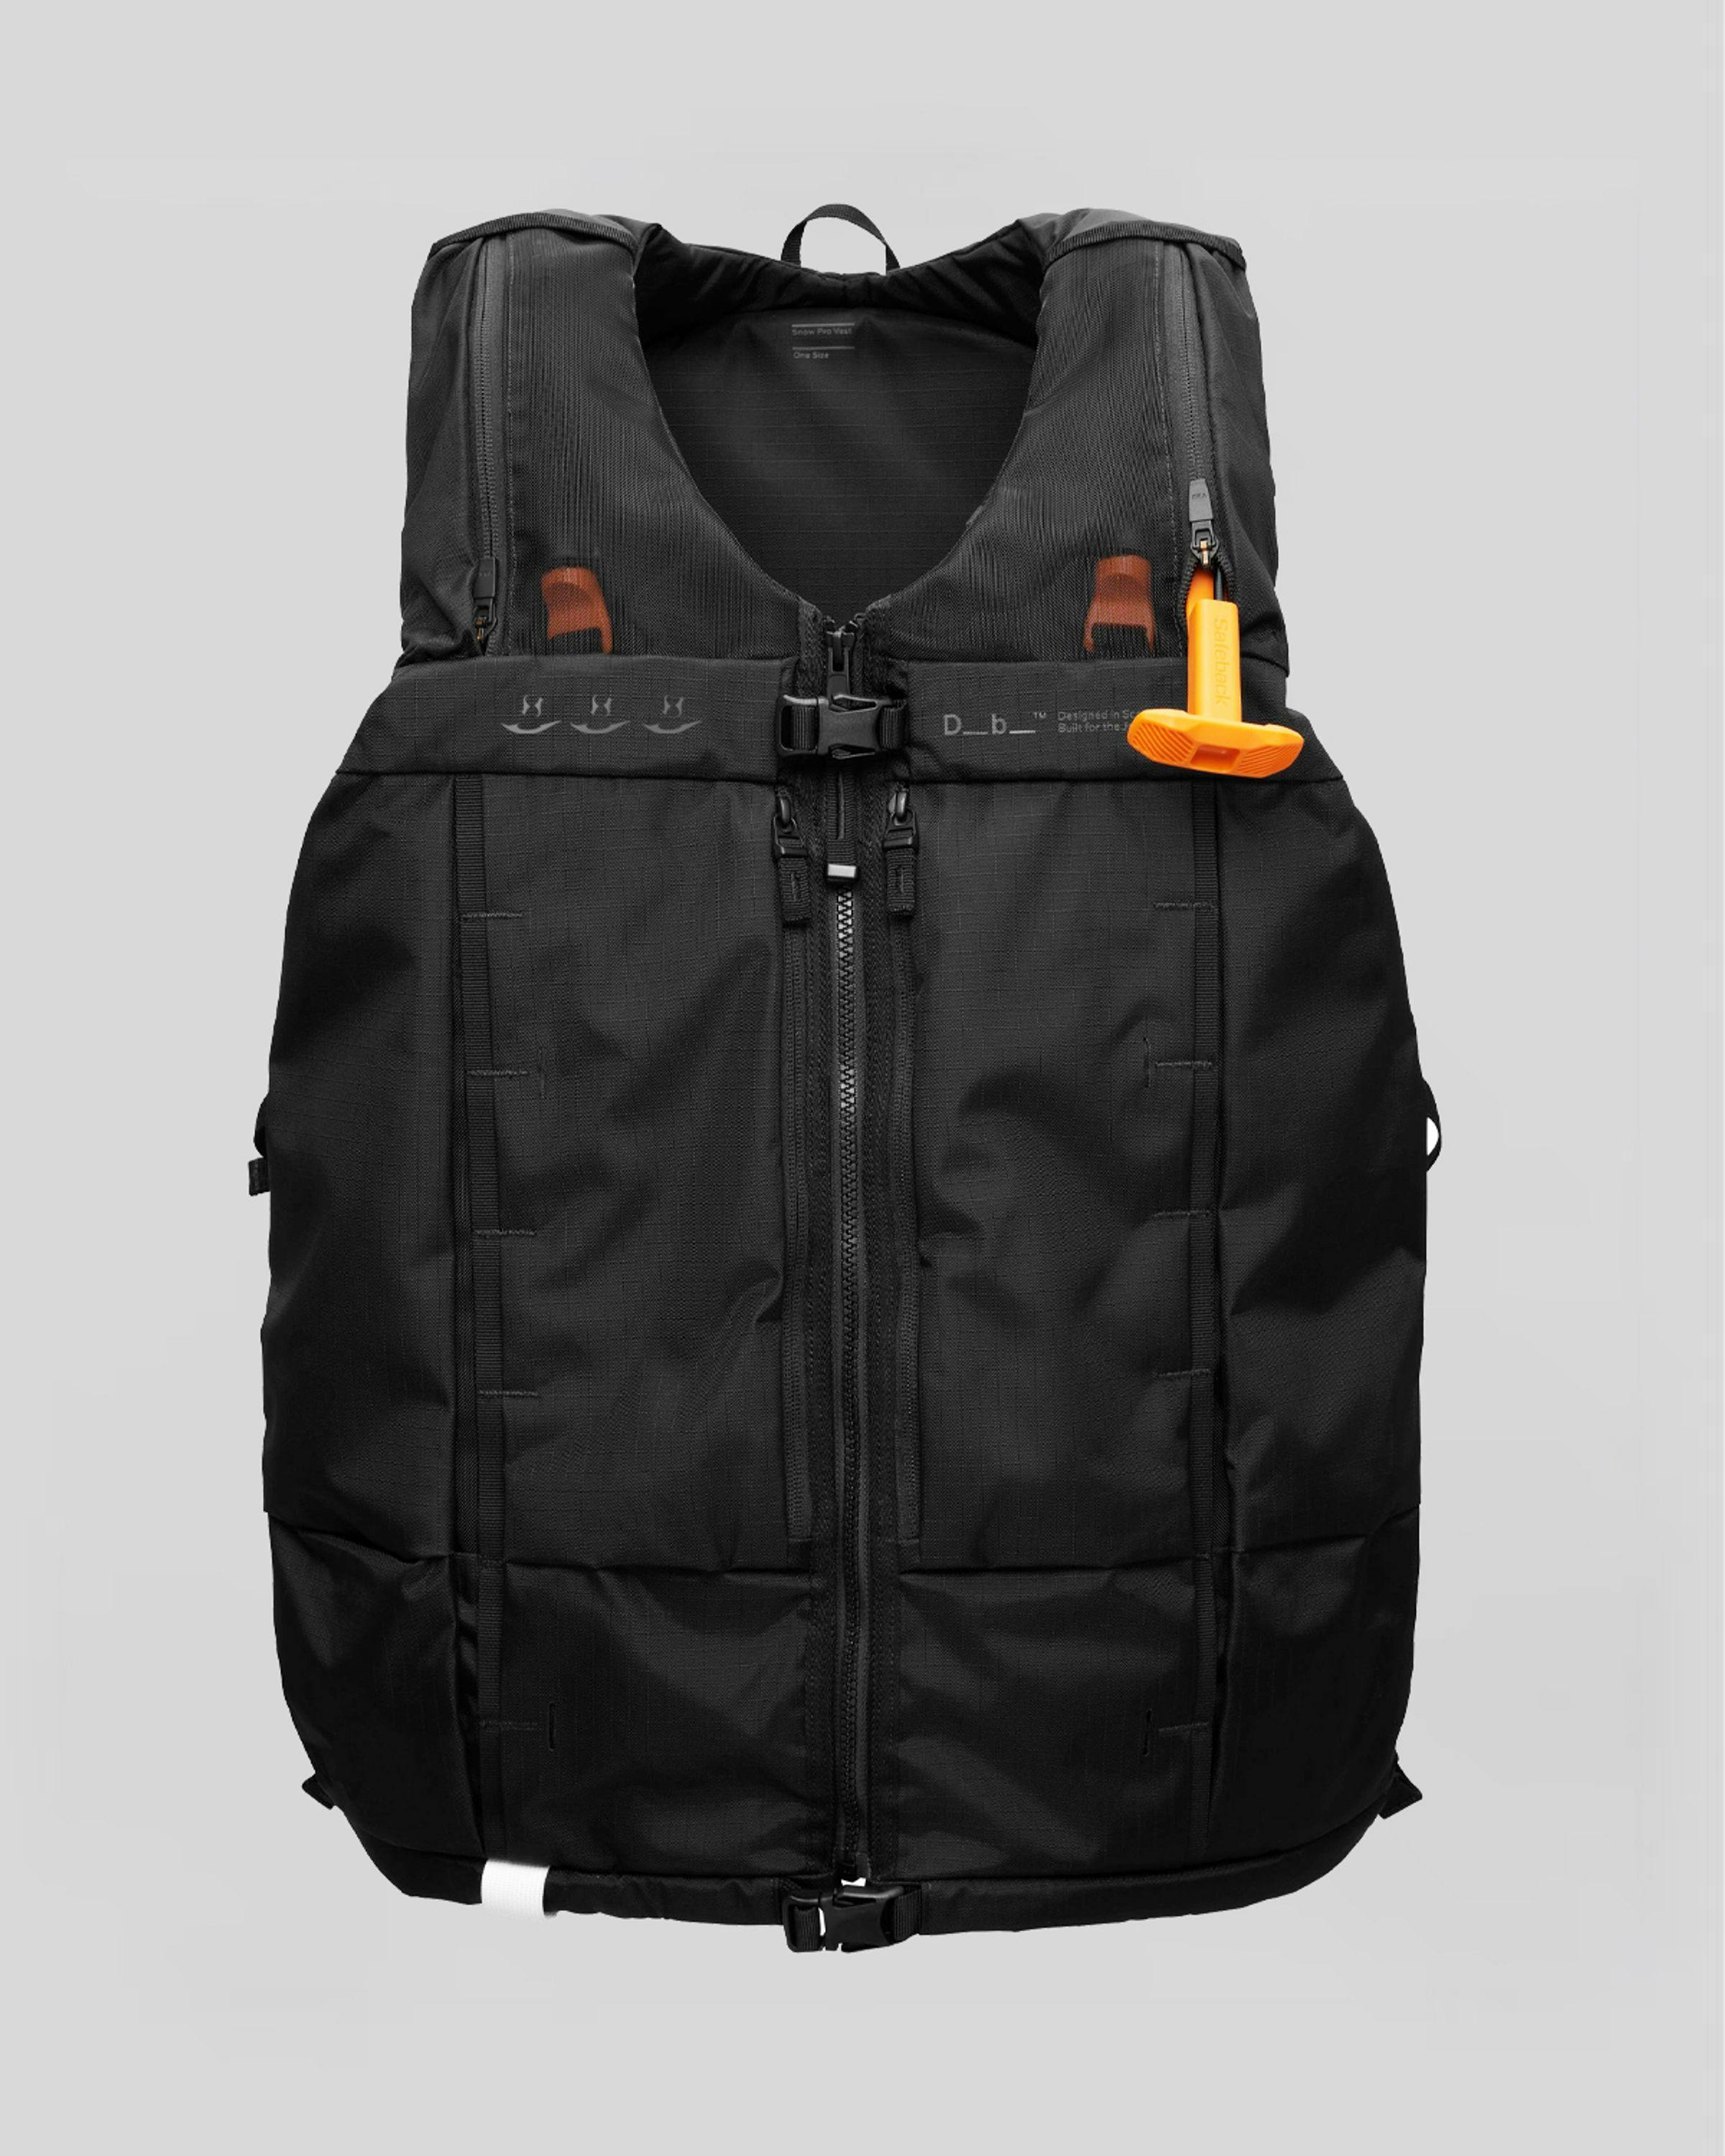 BM / DB Snow Pro Vest 8L